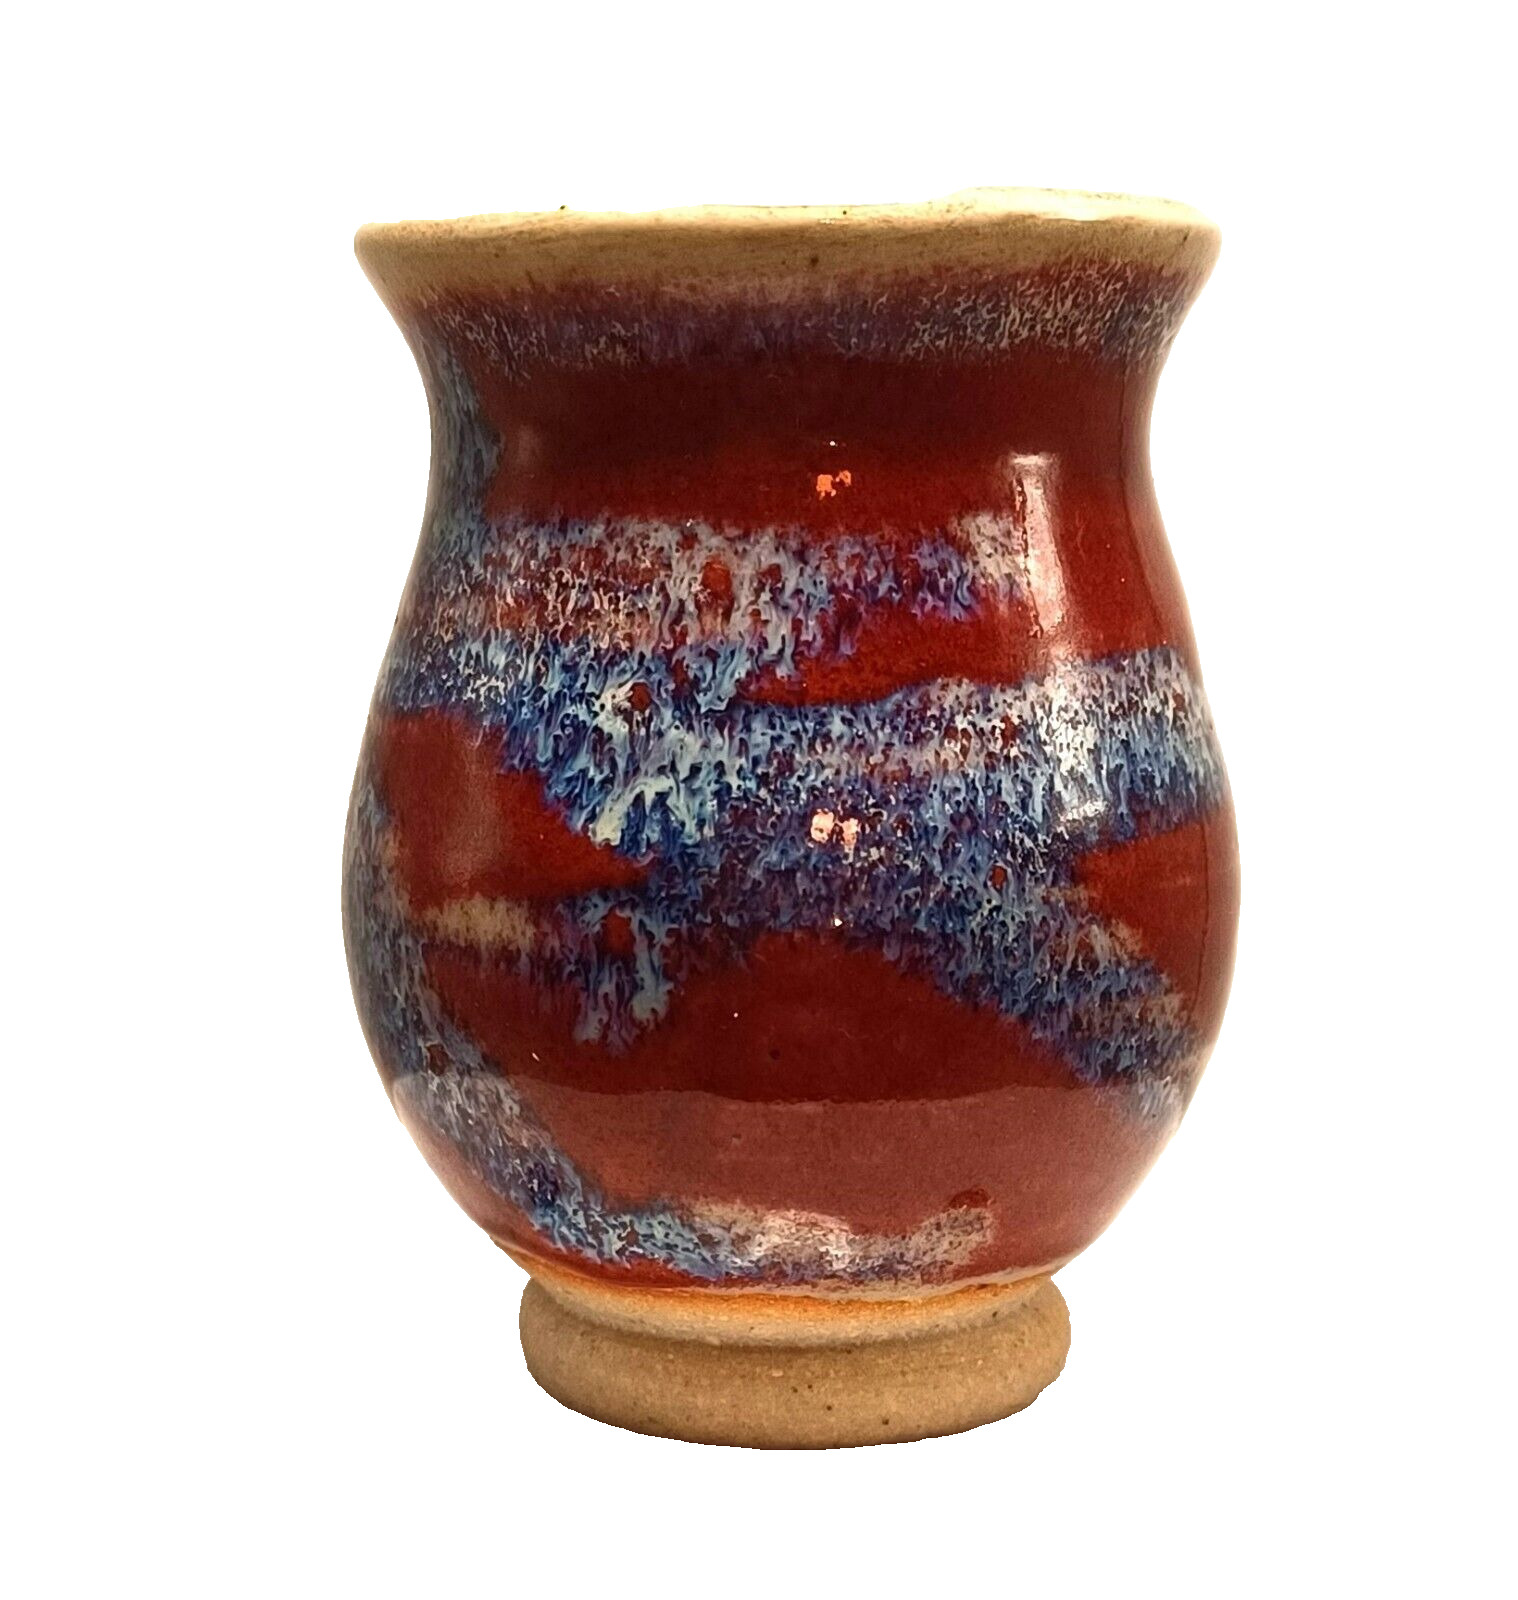 WHITEFISH Pottery Miniature Vase or Toothpick Holder Blue and Burgundy Glaze